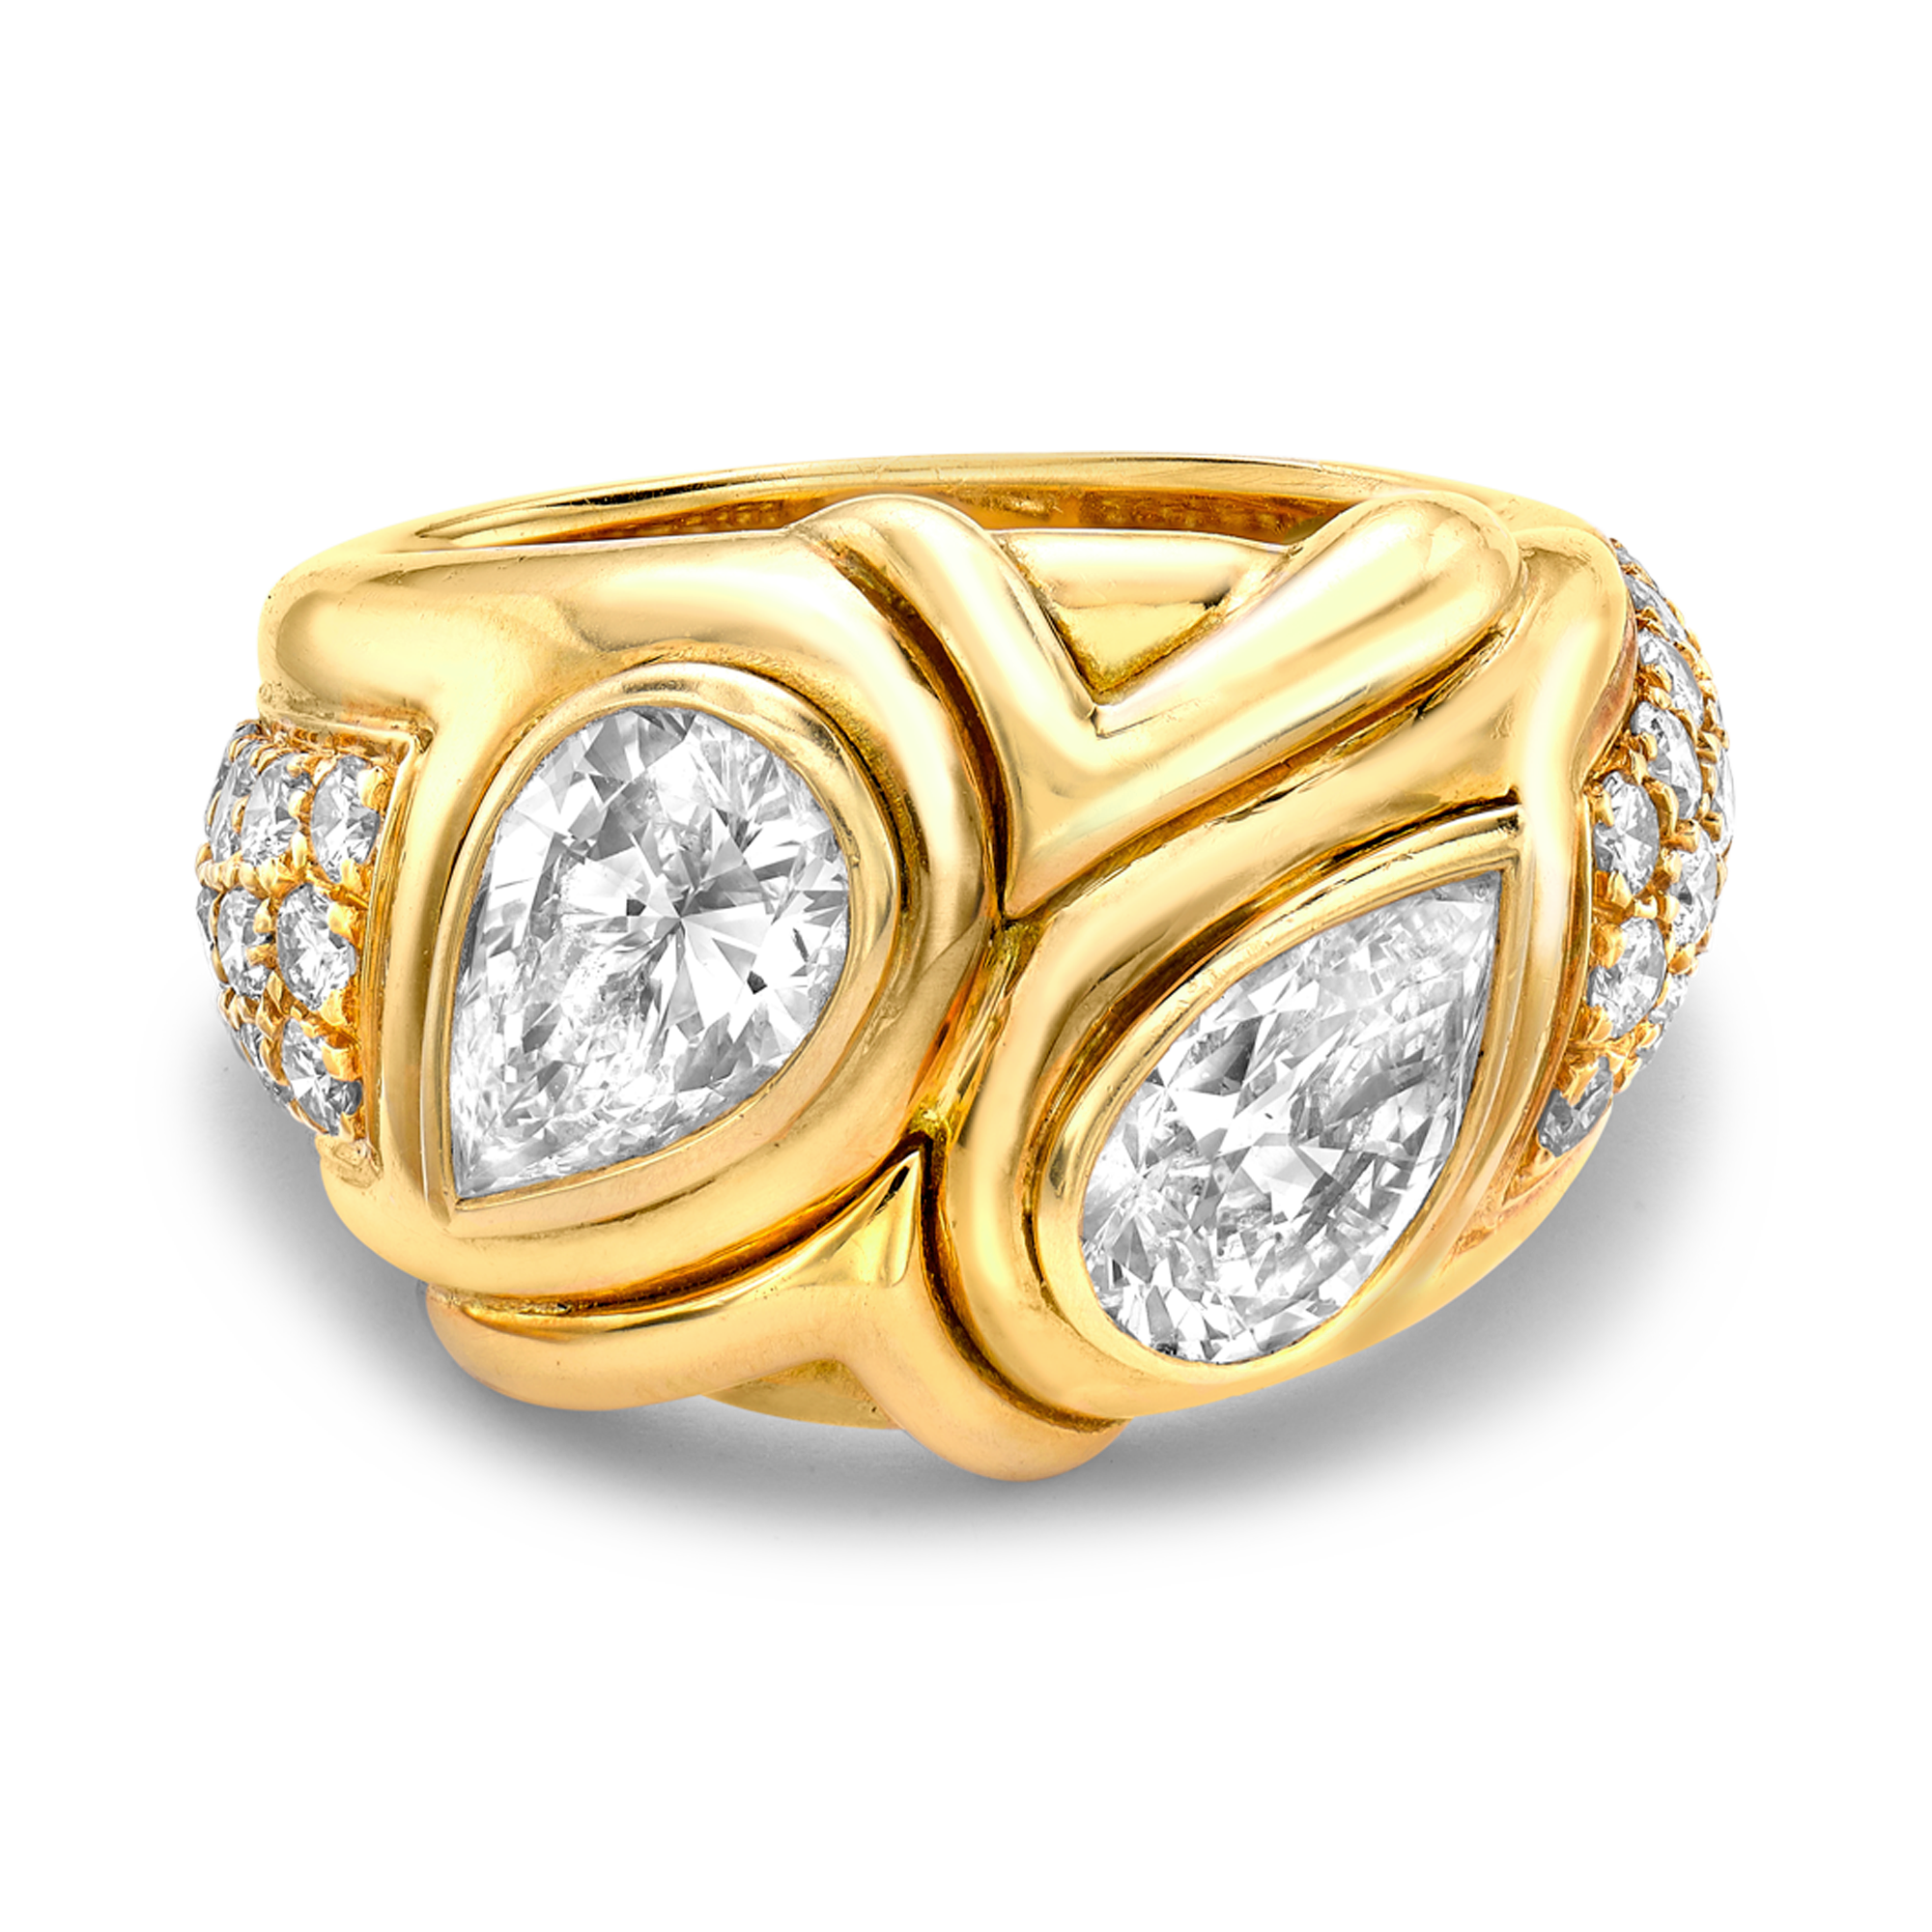 1980s Bvlgari Diamond Ring Pear Cut Dress Ring, with Diamond Shoulders_2